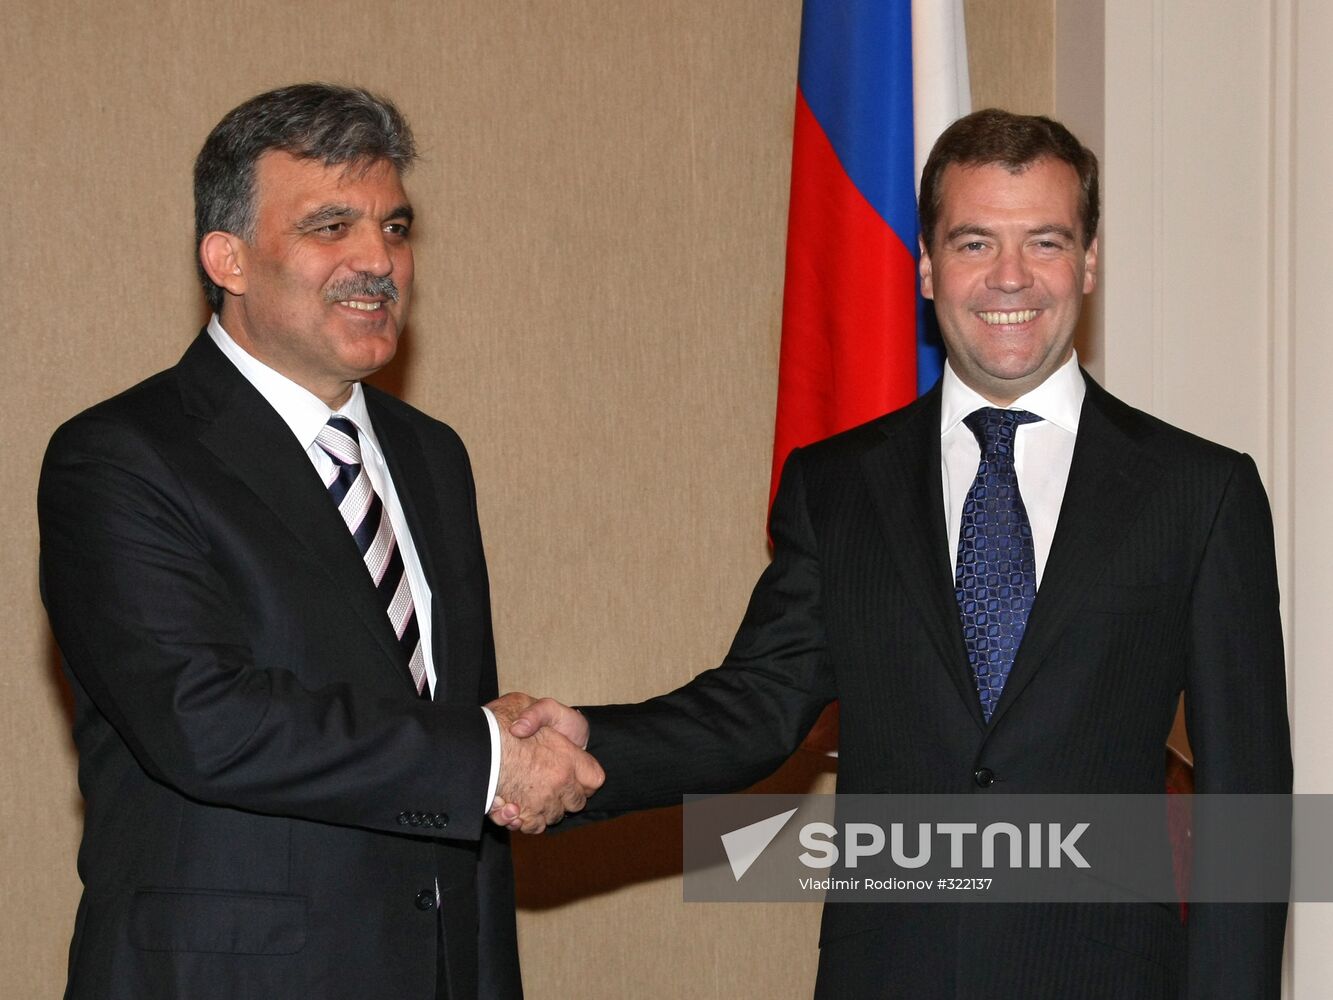 Abdullah Gul and Dmitry Medvedev